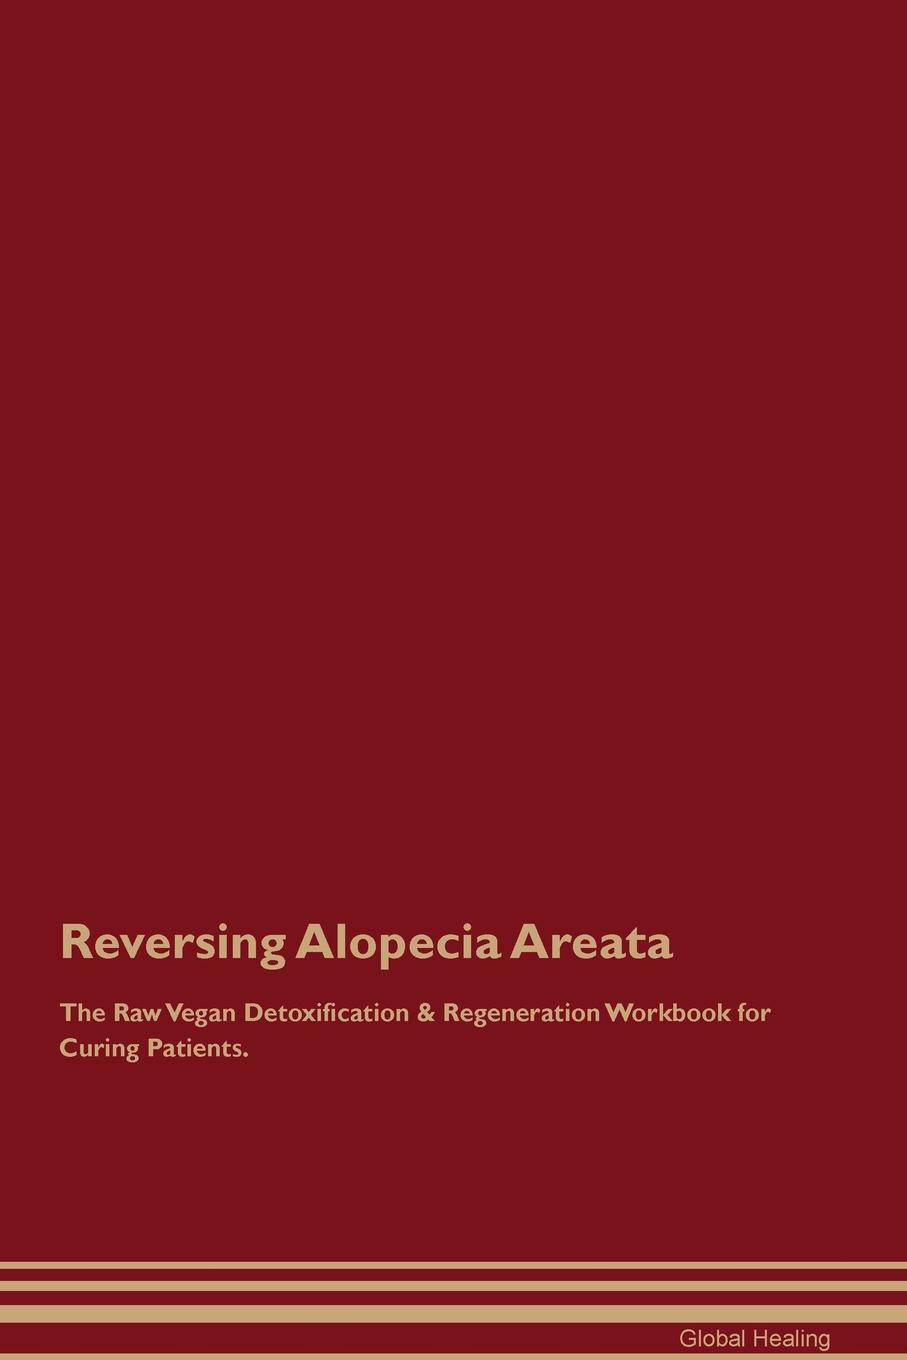 Reversing Alopecia Areata The Raw Vegan Detoxification & Regeneration Workbook for Curing Patients